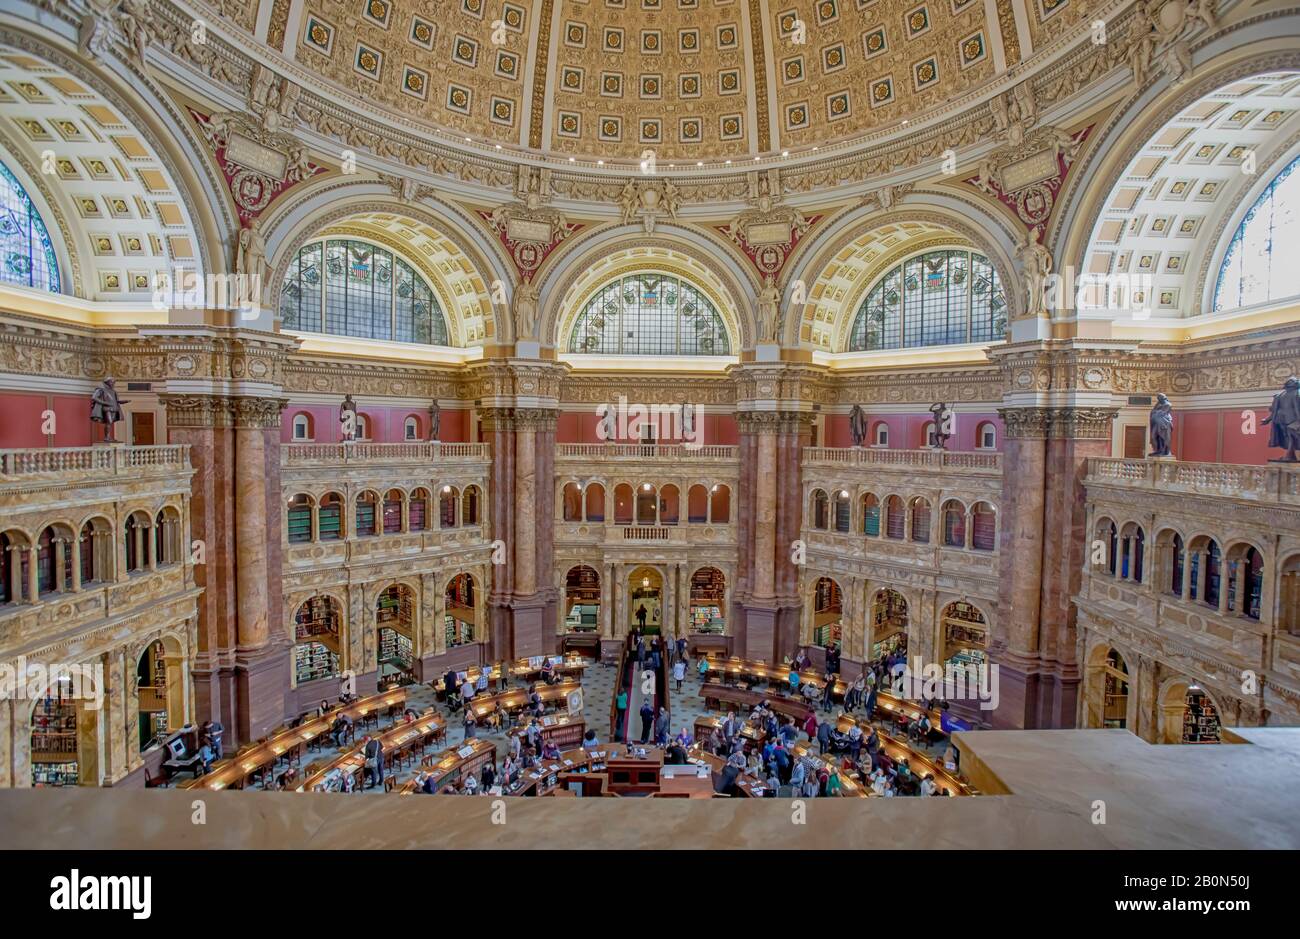 Washington, D.C. - 17. Januar 2020 - Innere der Library of Congress Thomas Jefferson Building Haupt-Lesesaal-Kuppel. Stockfoto